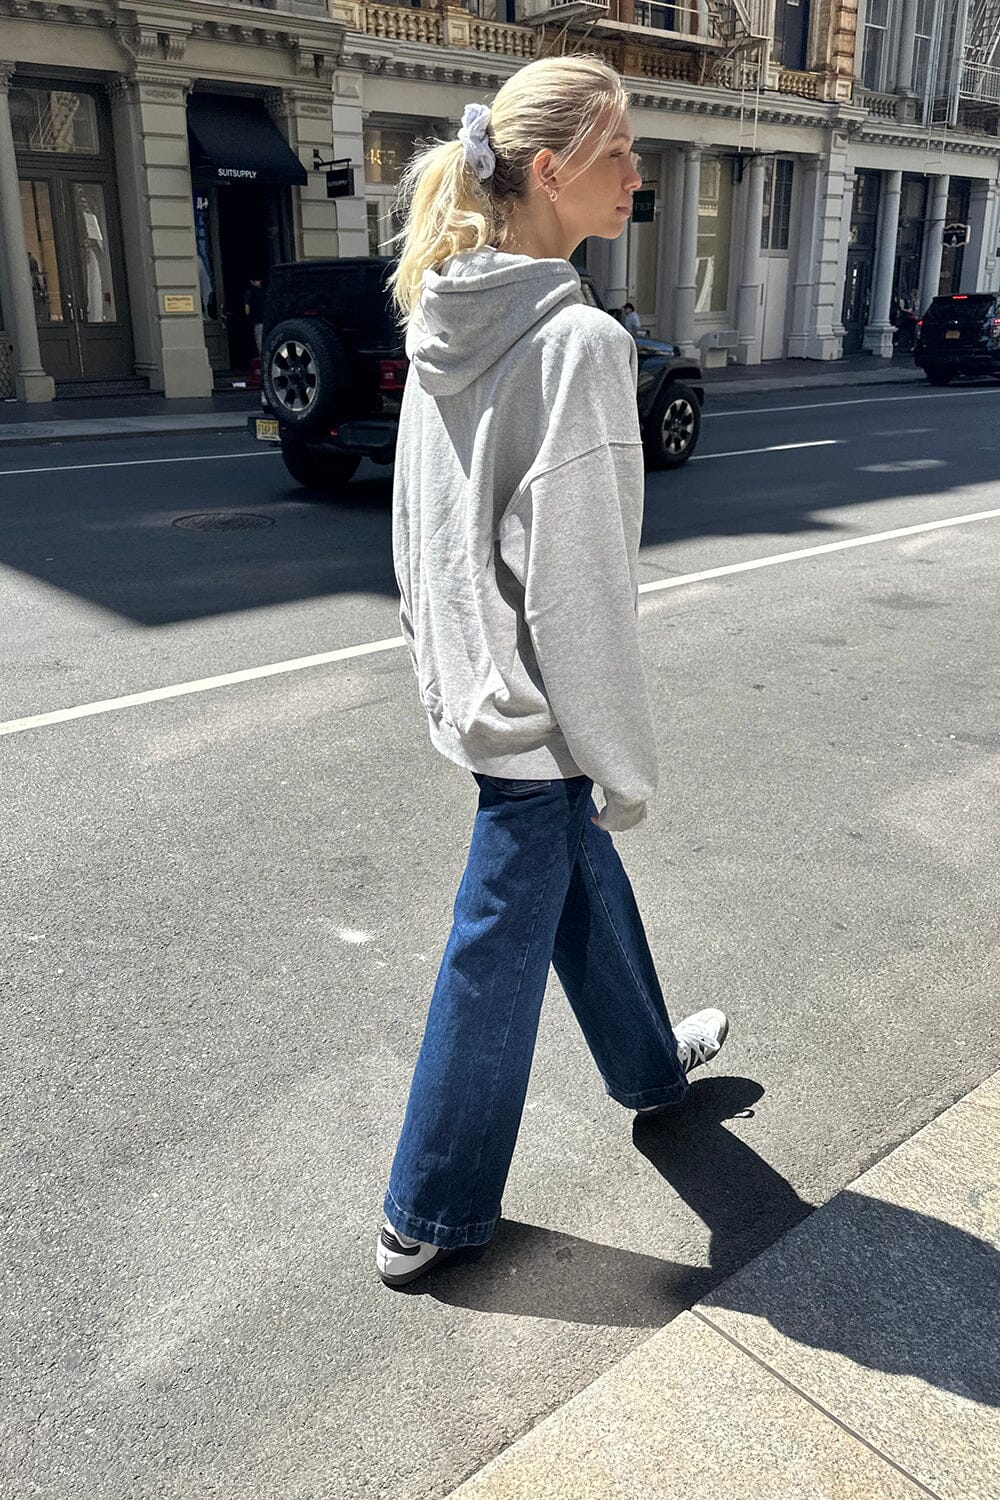 Brandy Melville gray oversized Christy New York hoodie